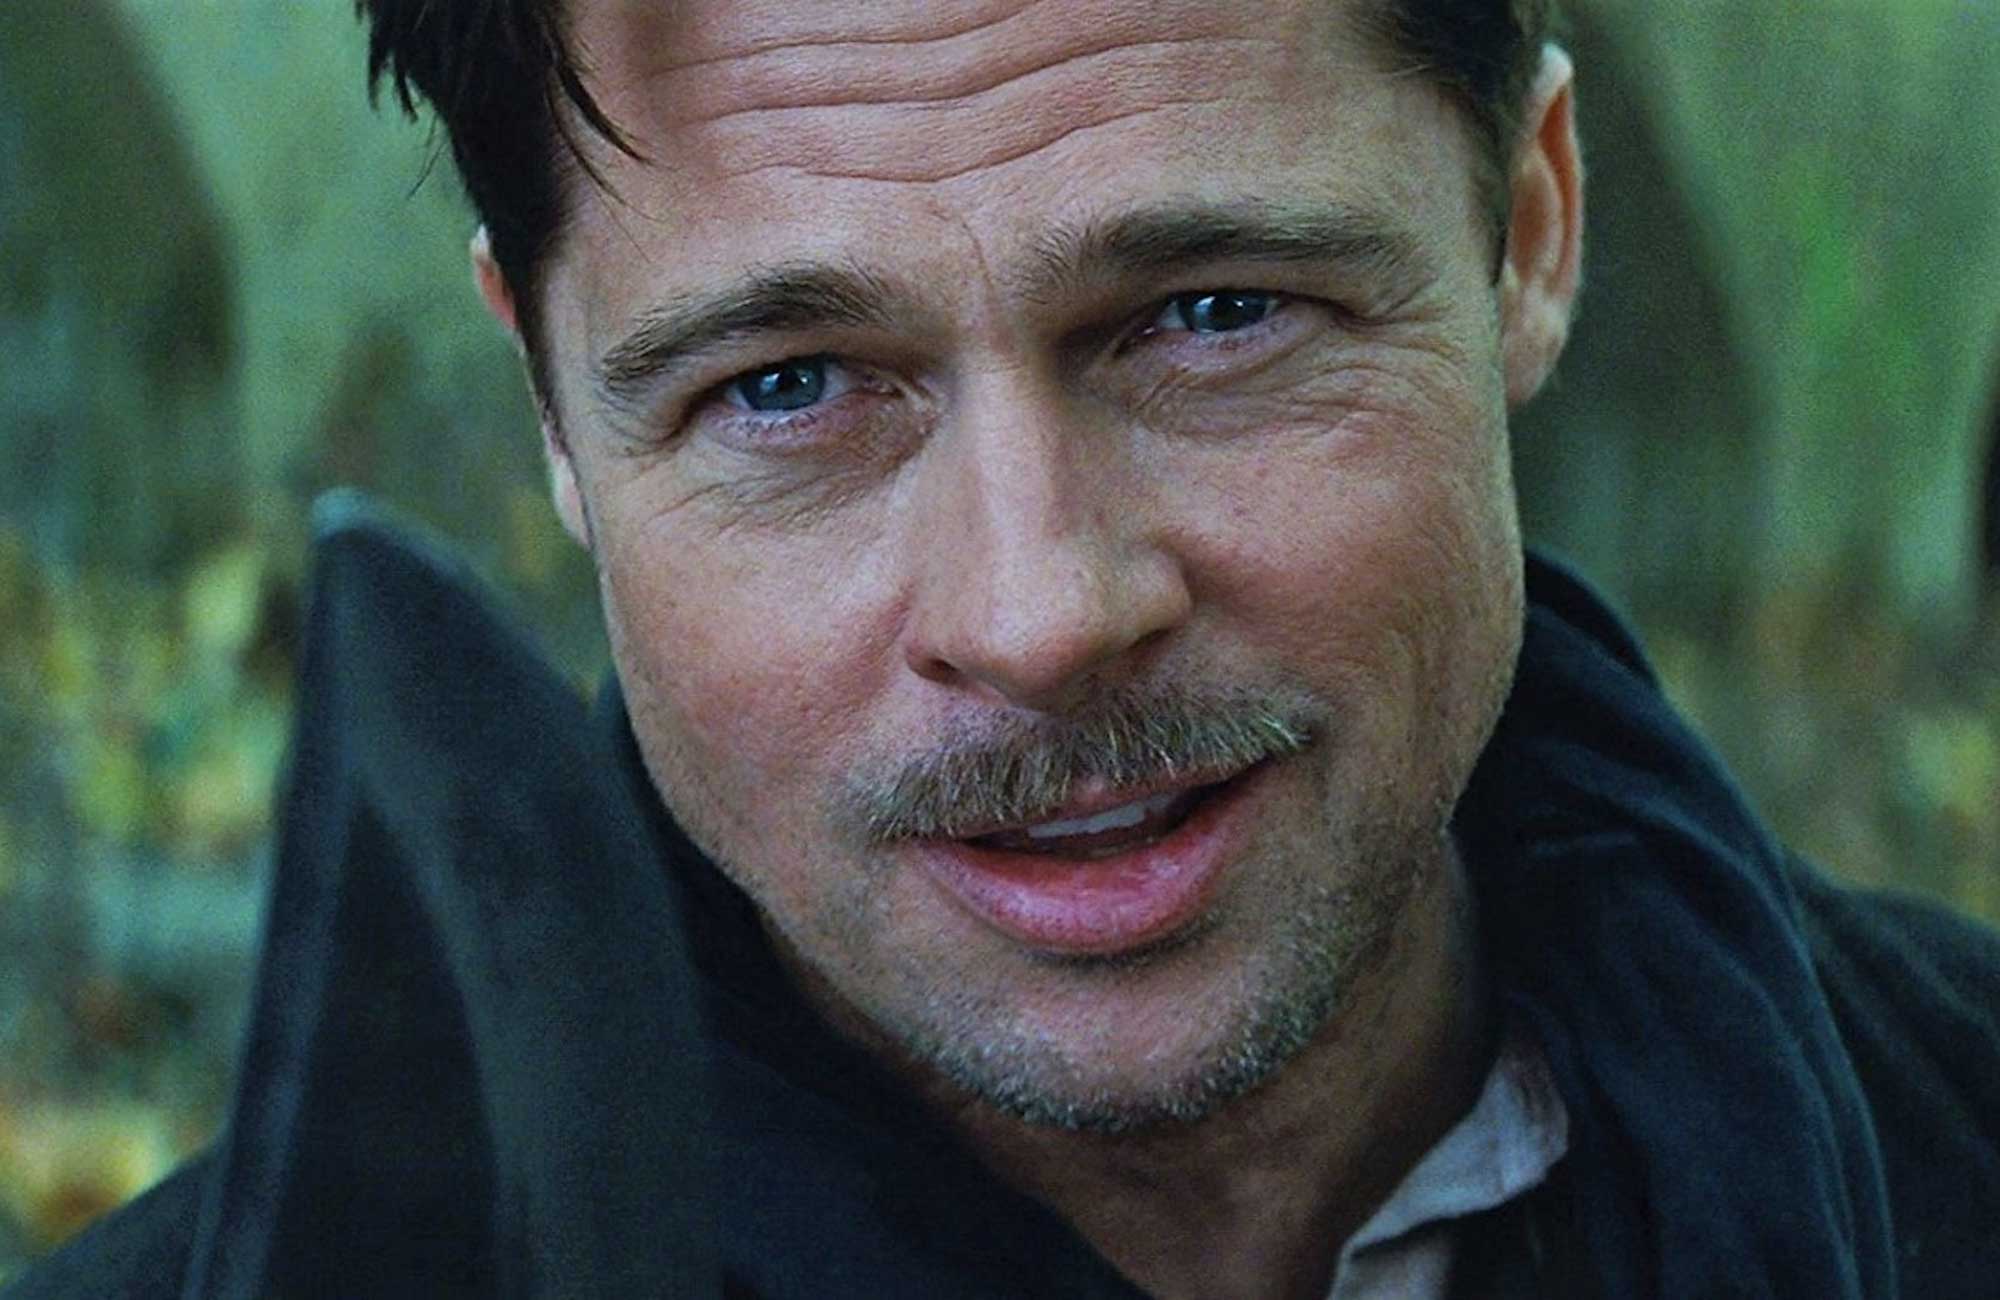 Brad Pitt's messy hair in "Inglourious Basterds" - wide 7